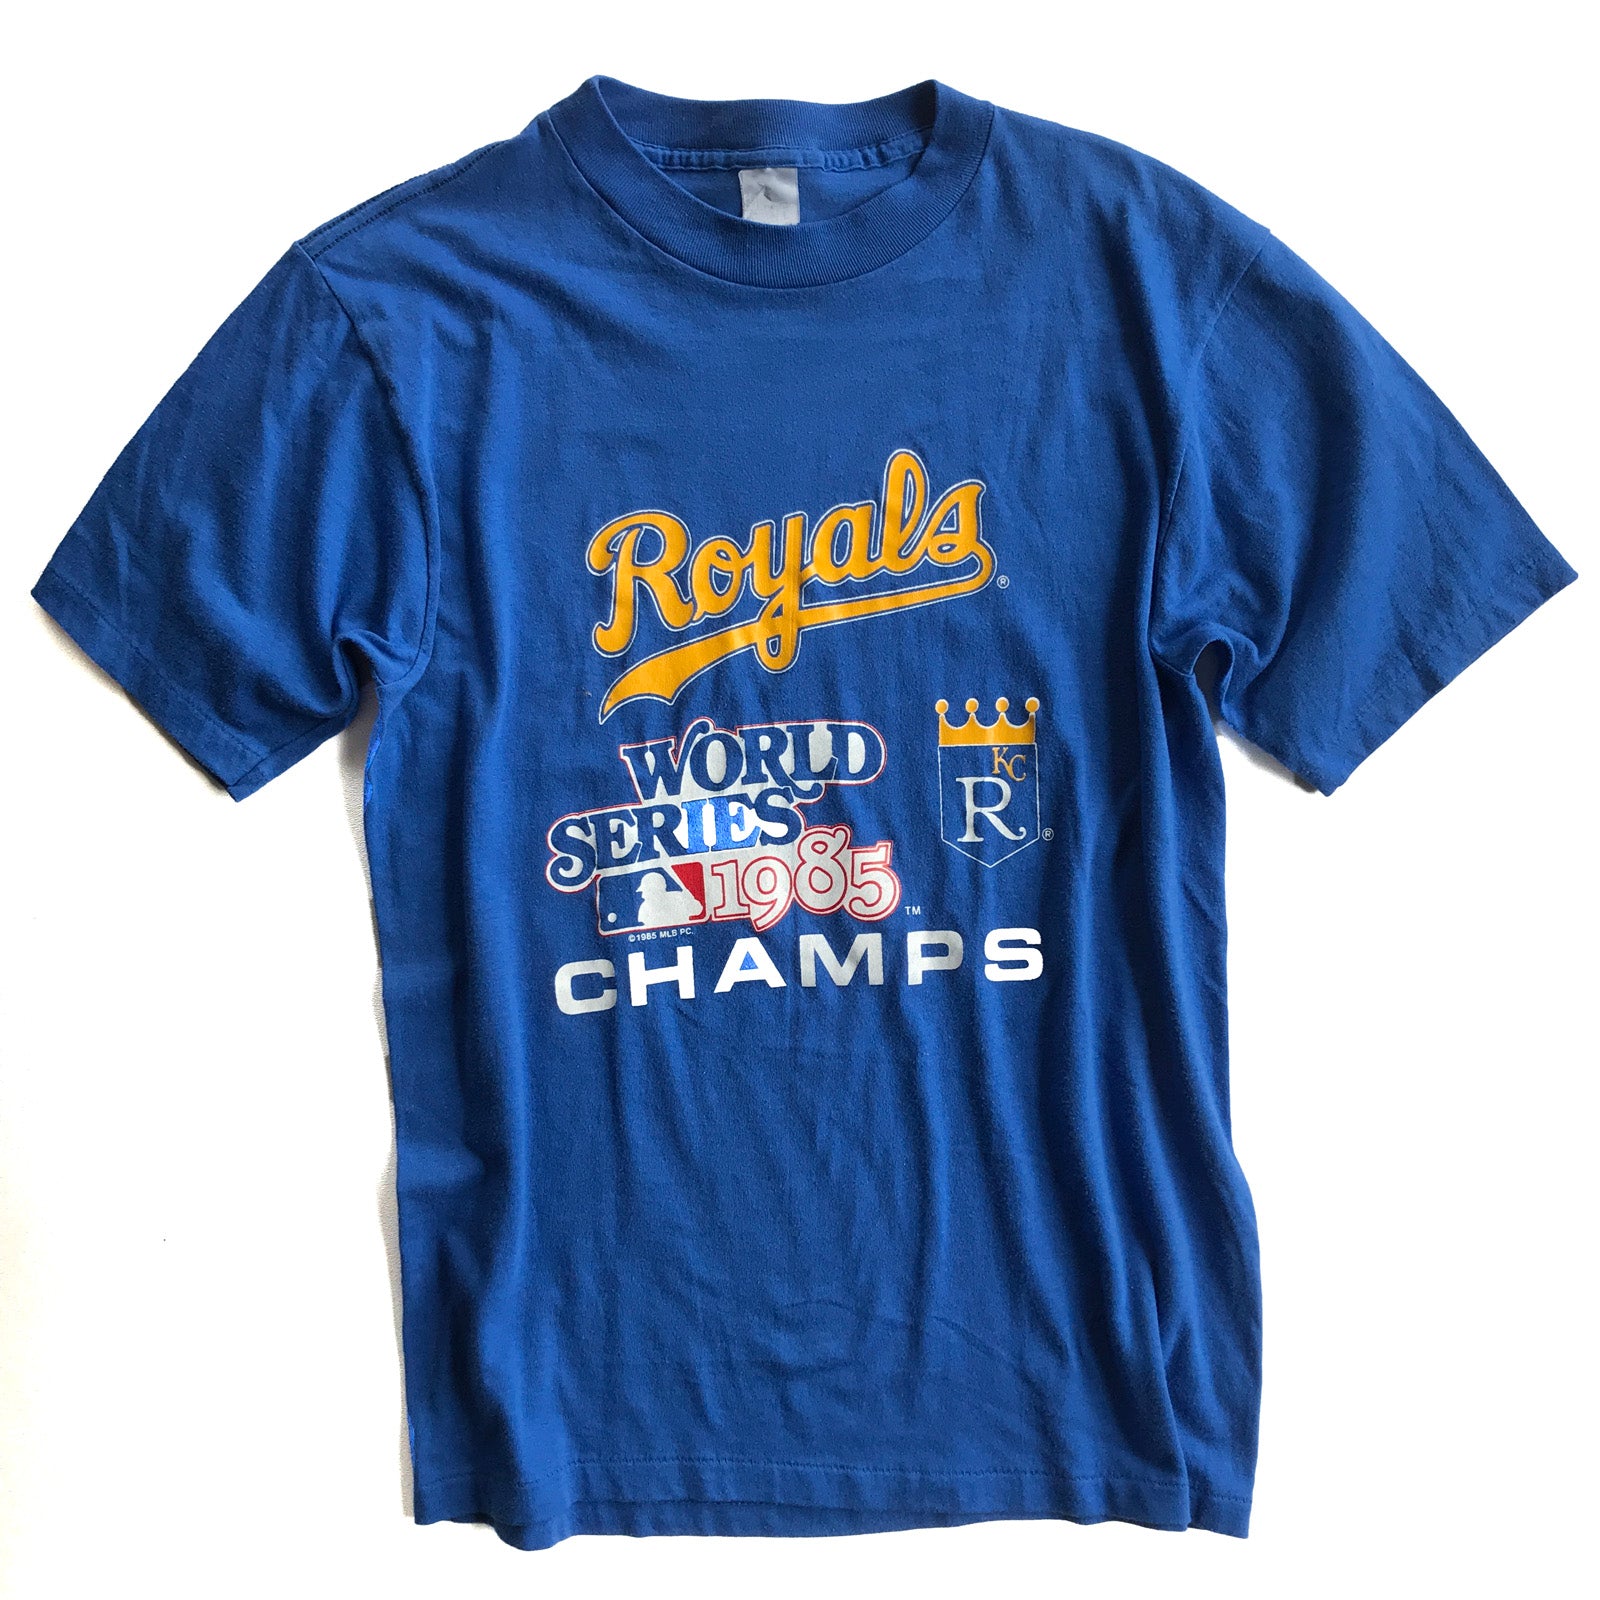 royals world series champions shirt